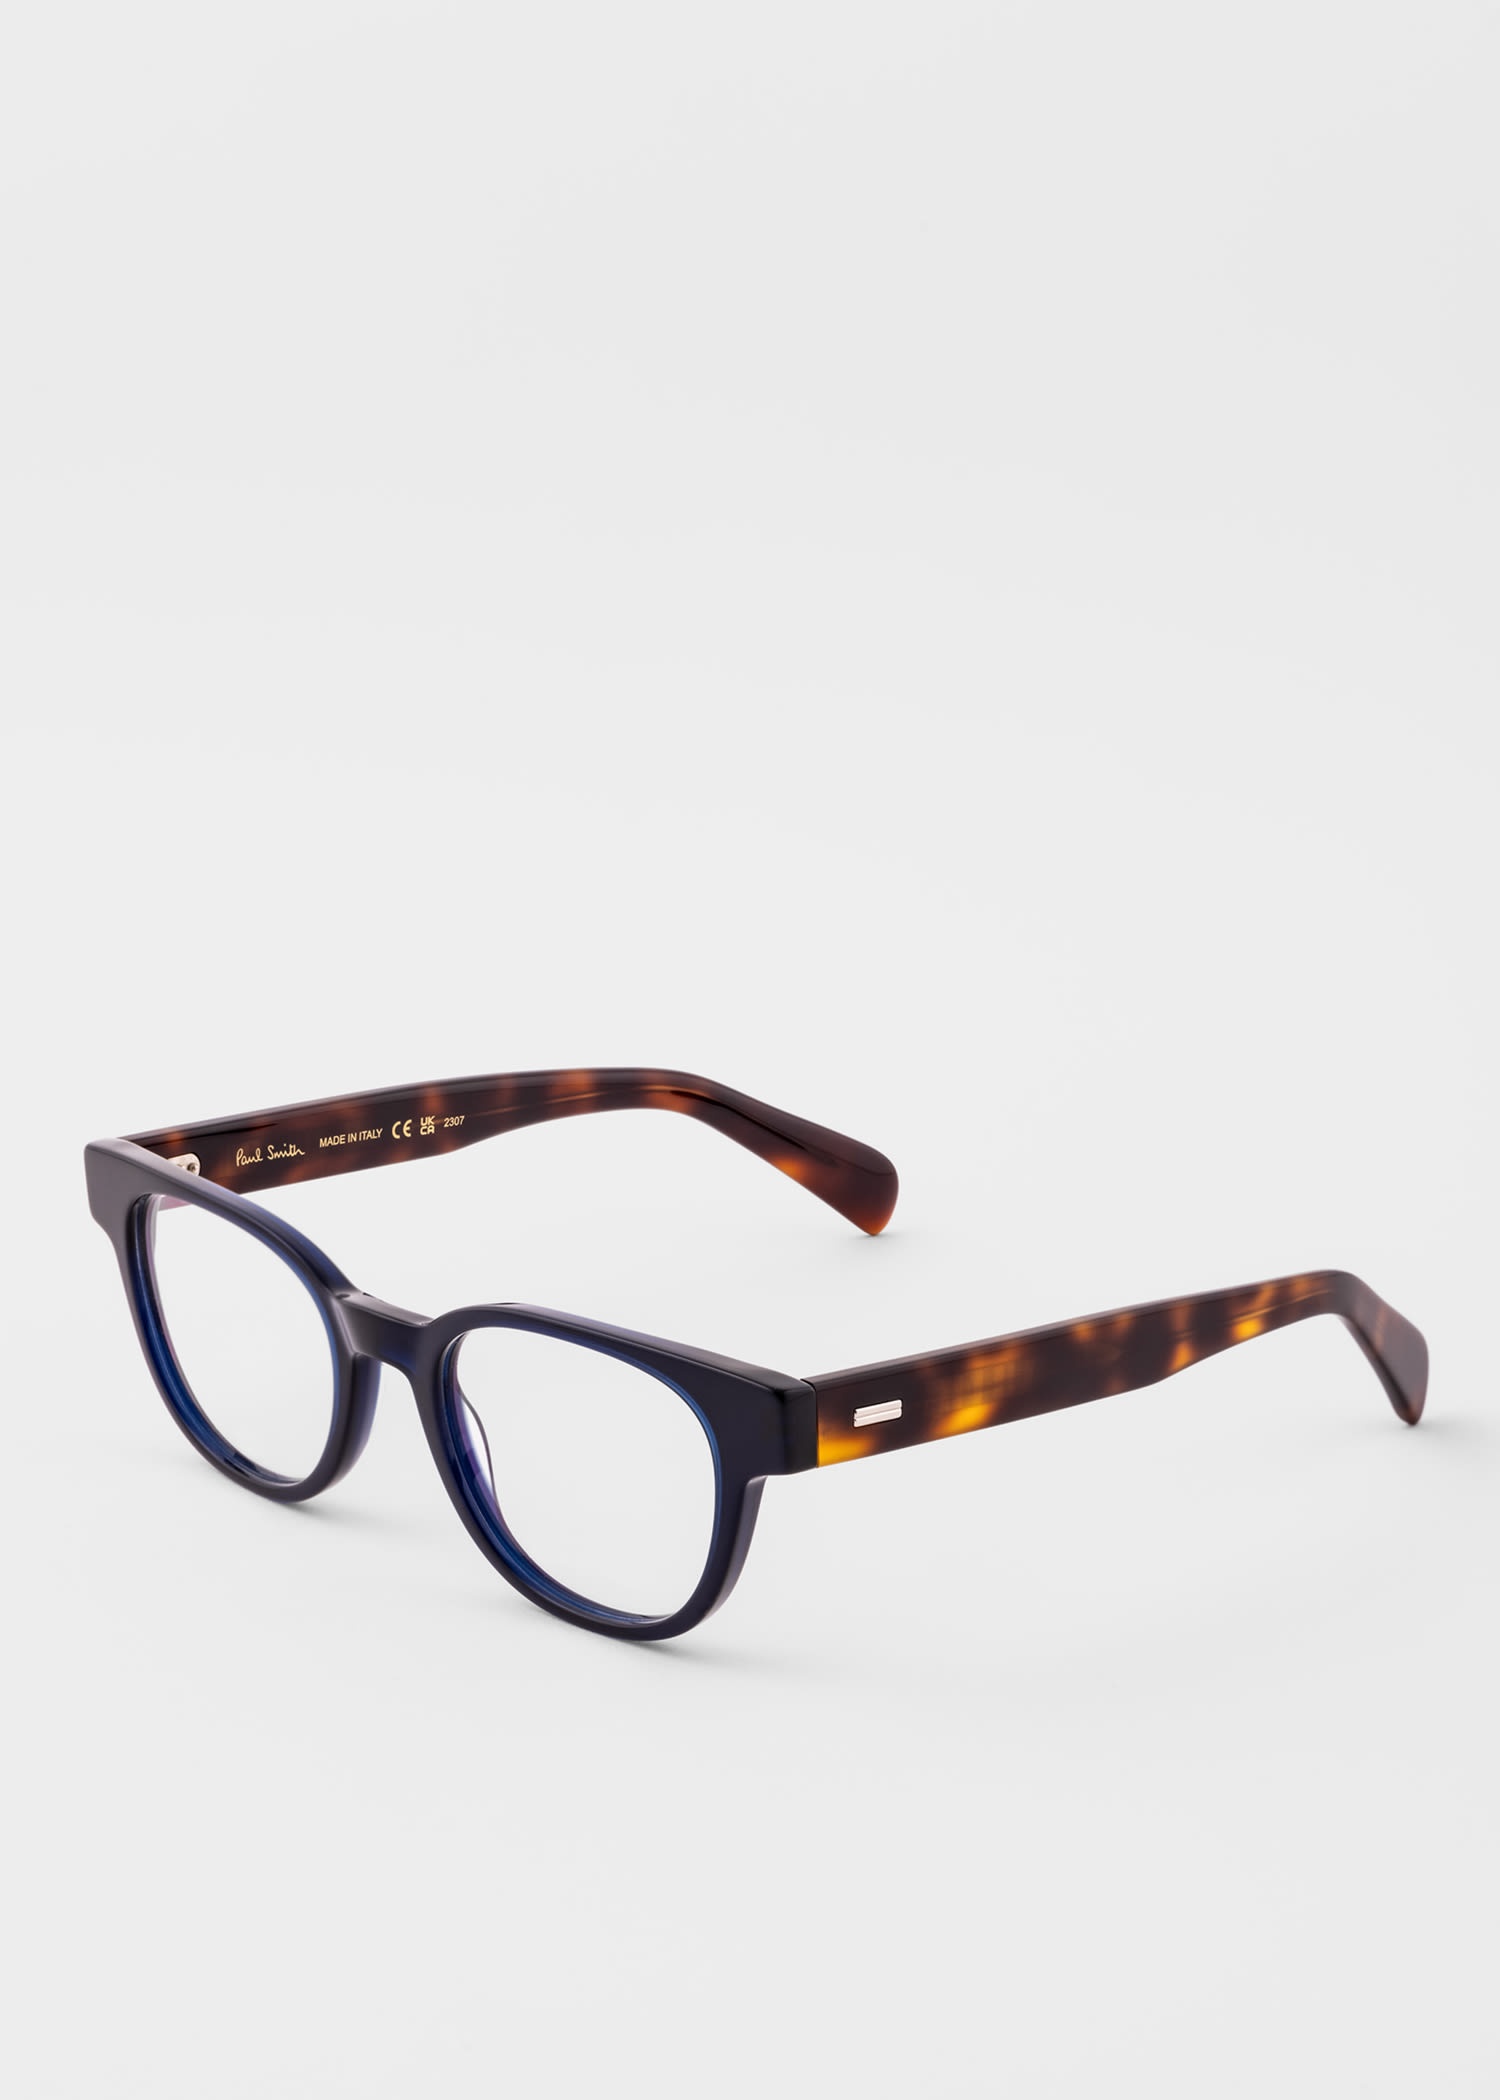 'Haydon' Spectacles - 2